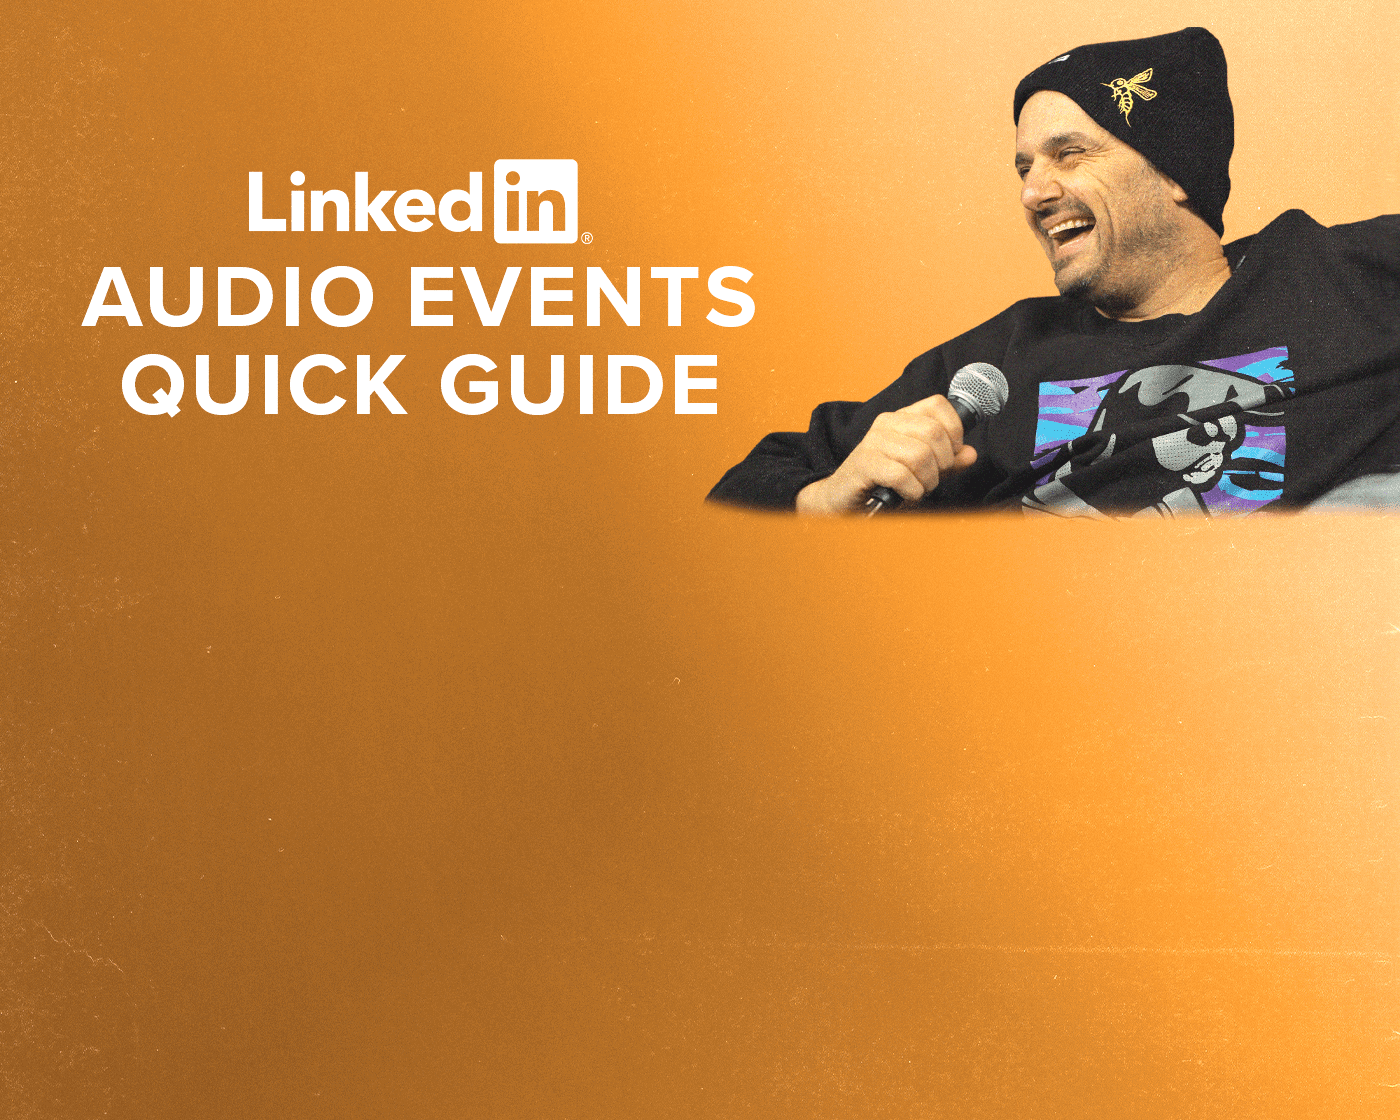 LinkedIn Audio Events Quick Guide